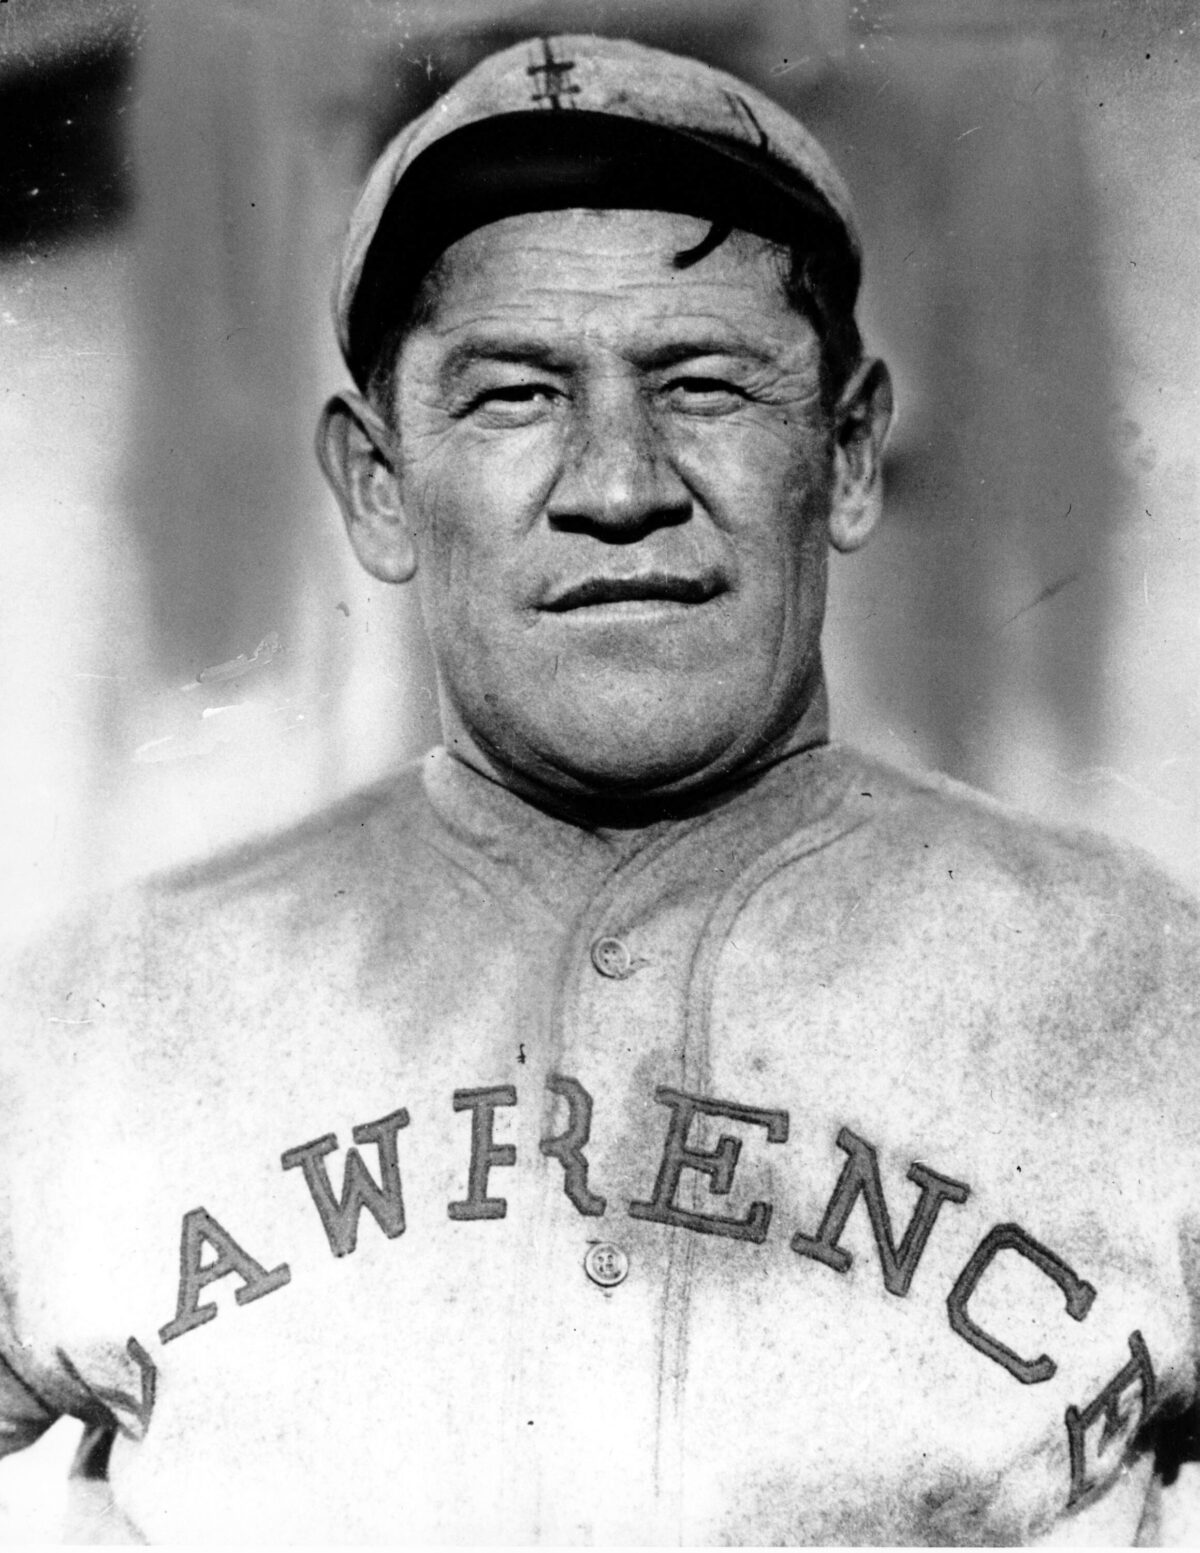 Jim Thorpe in a baseball uniform